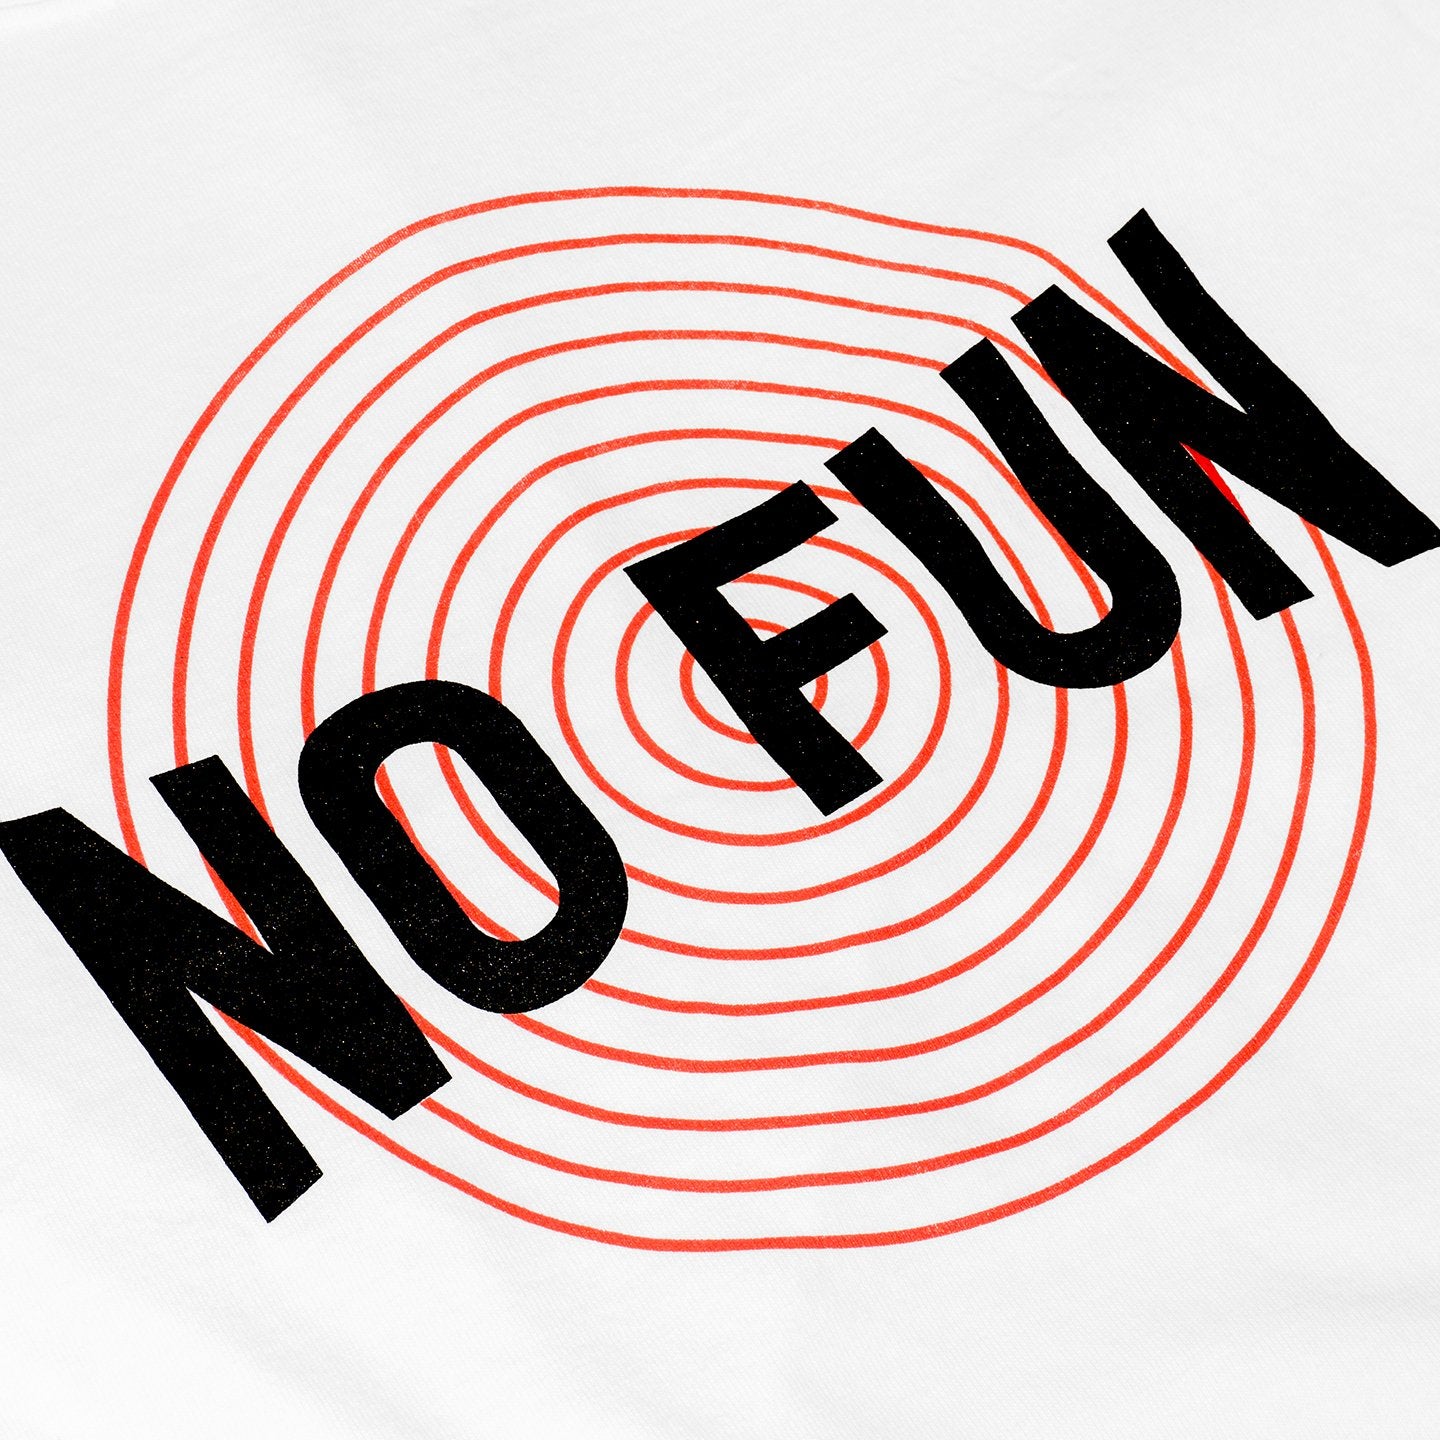 Detail of No Fun Press "Circles" Shirt. Red concentric circles with black No Fun logo on top.